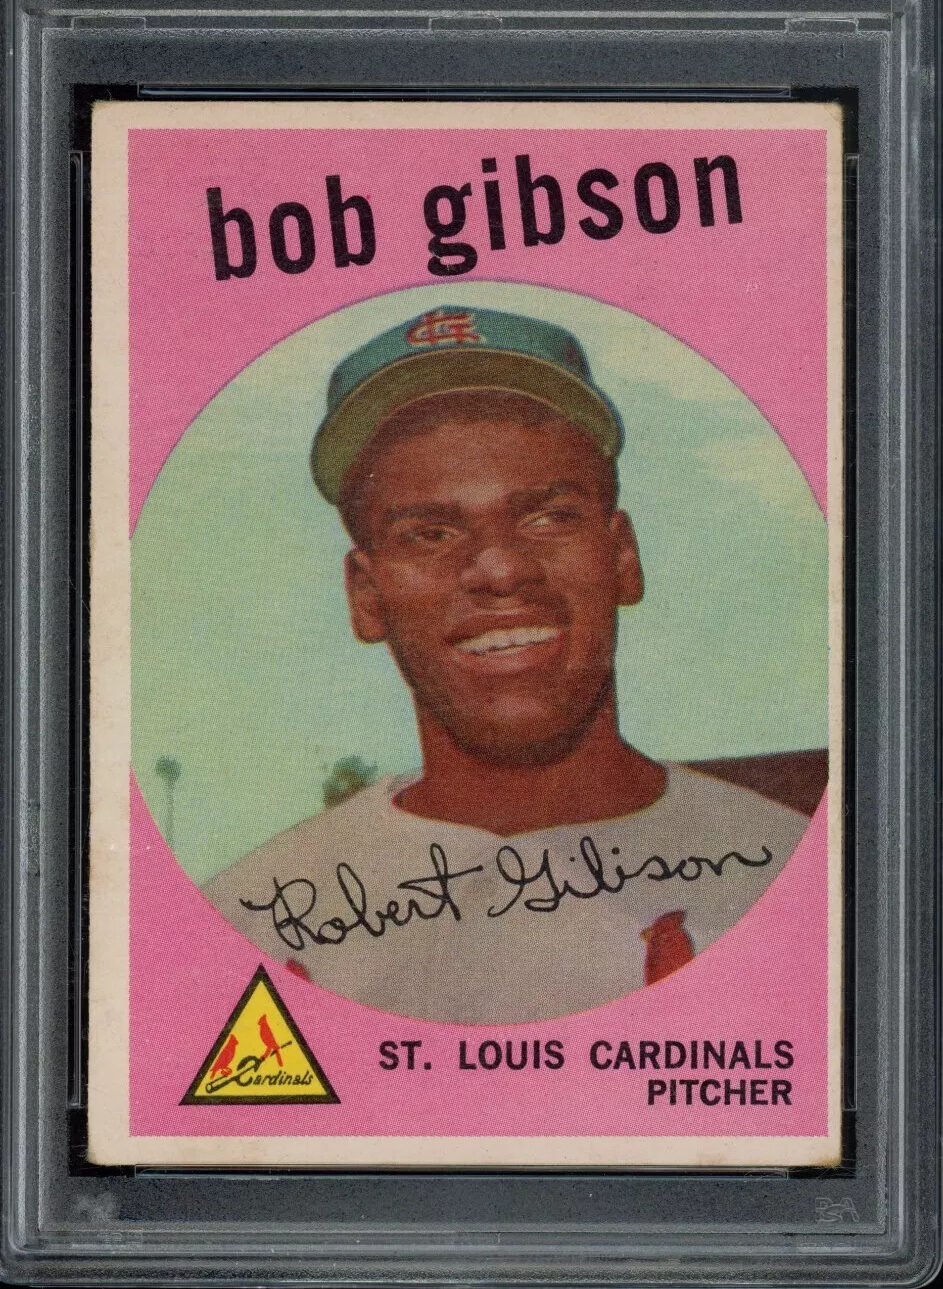 1959 Topps Bob Gibson rookie card